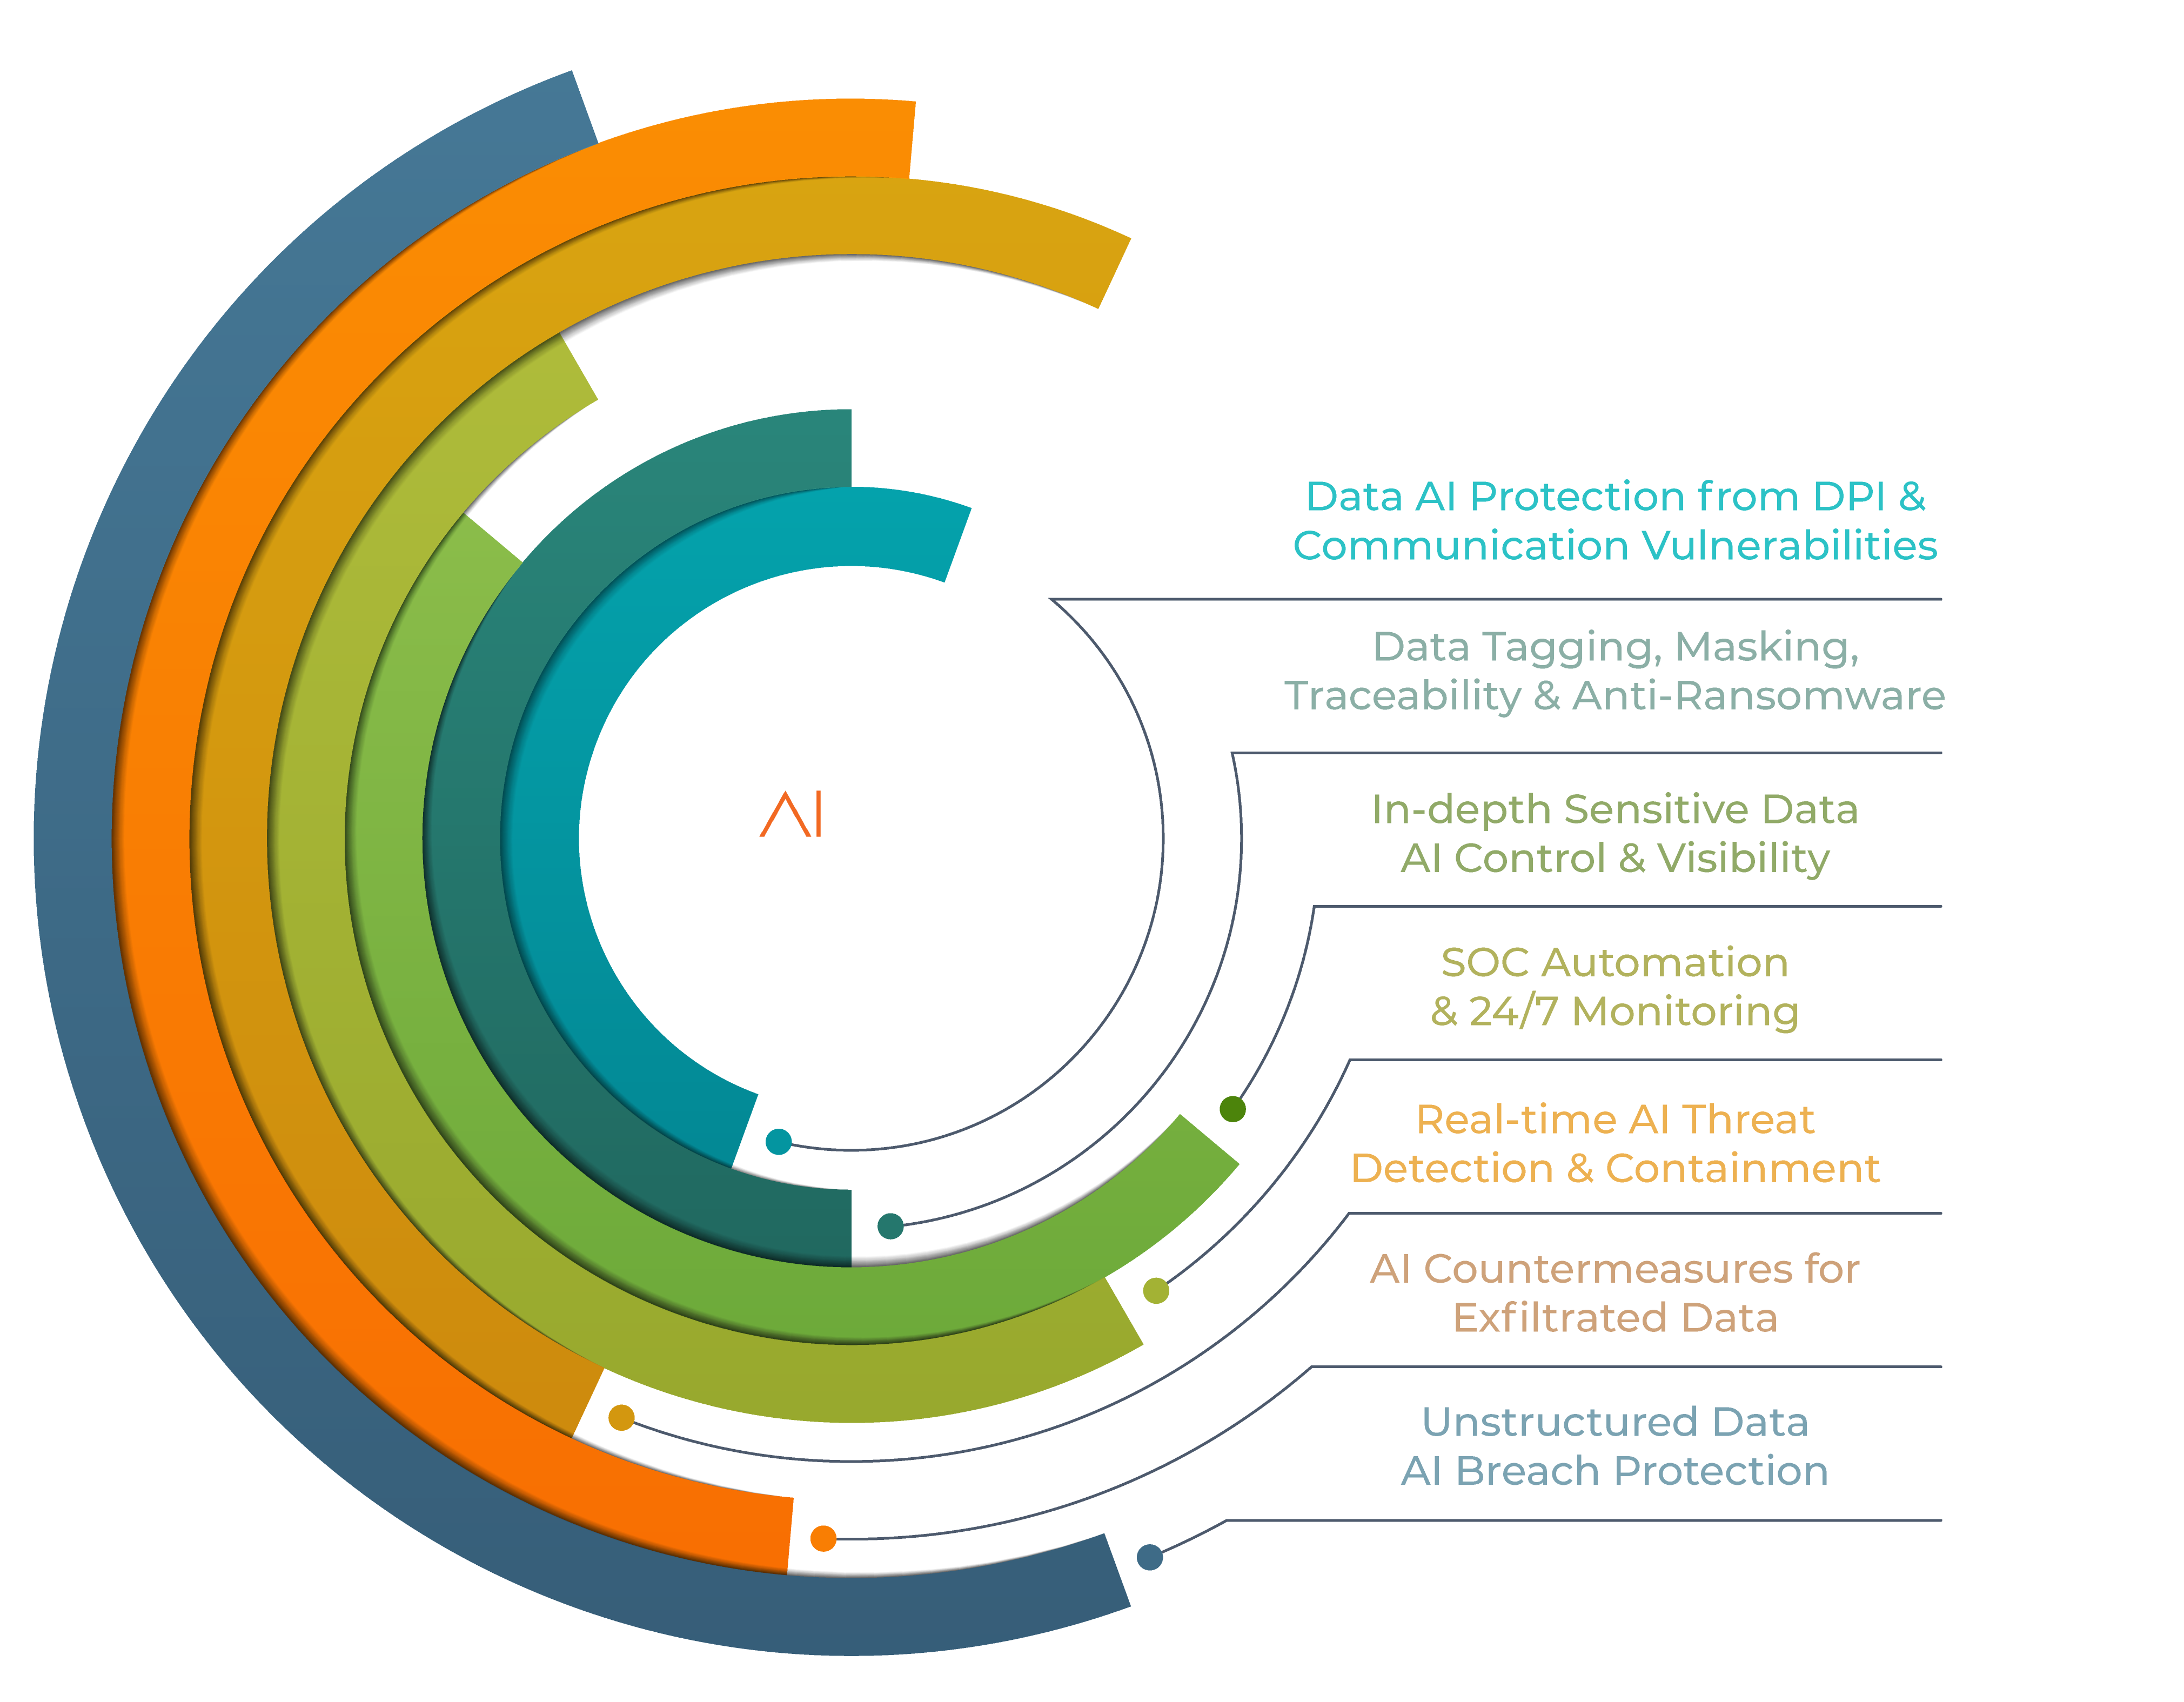 sccai fusion features